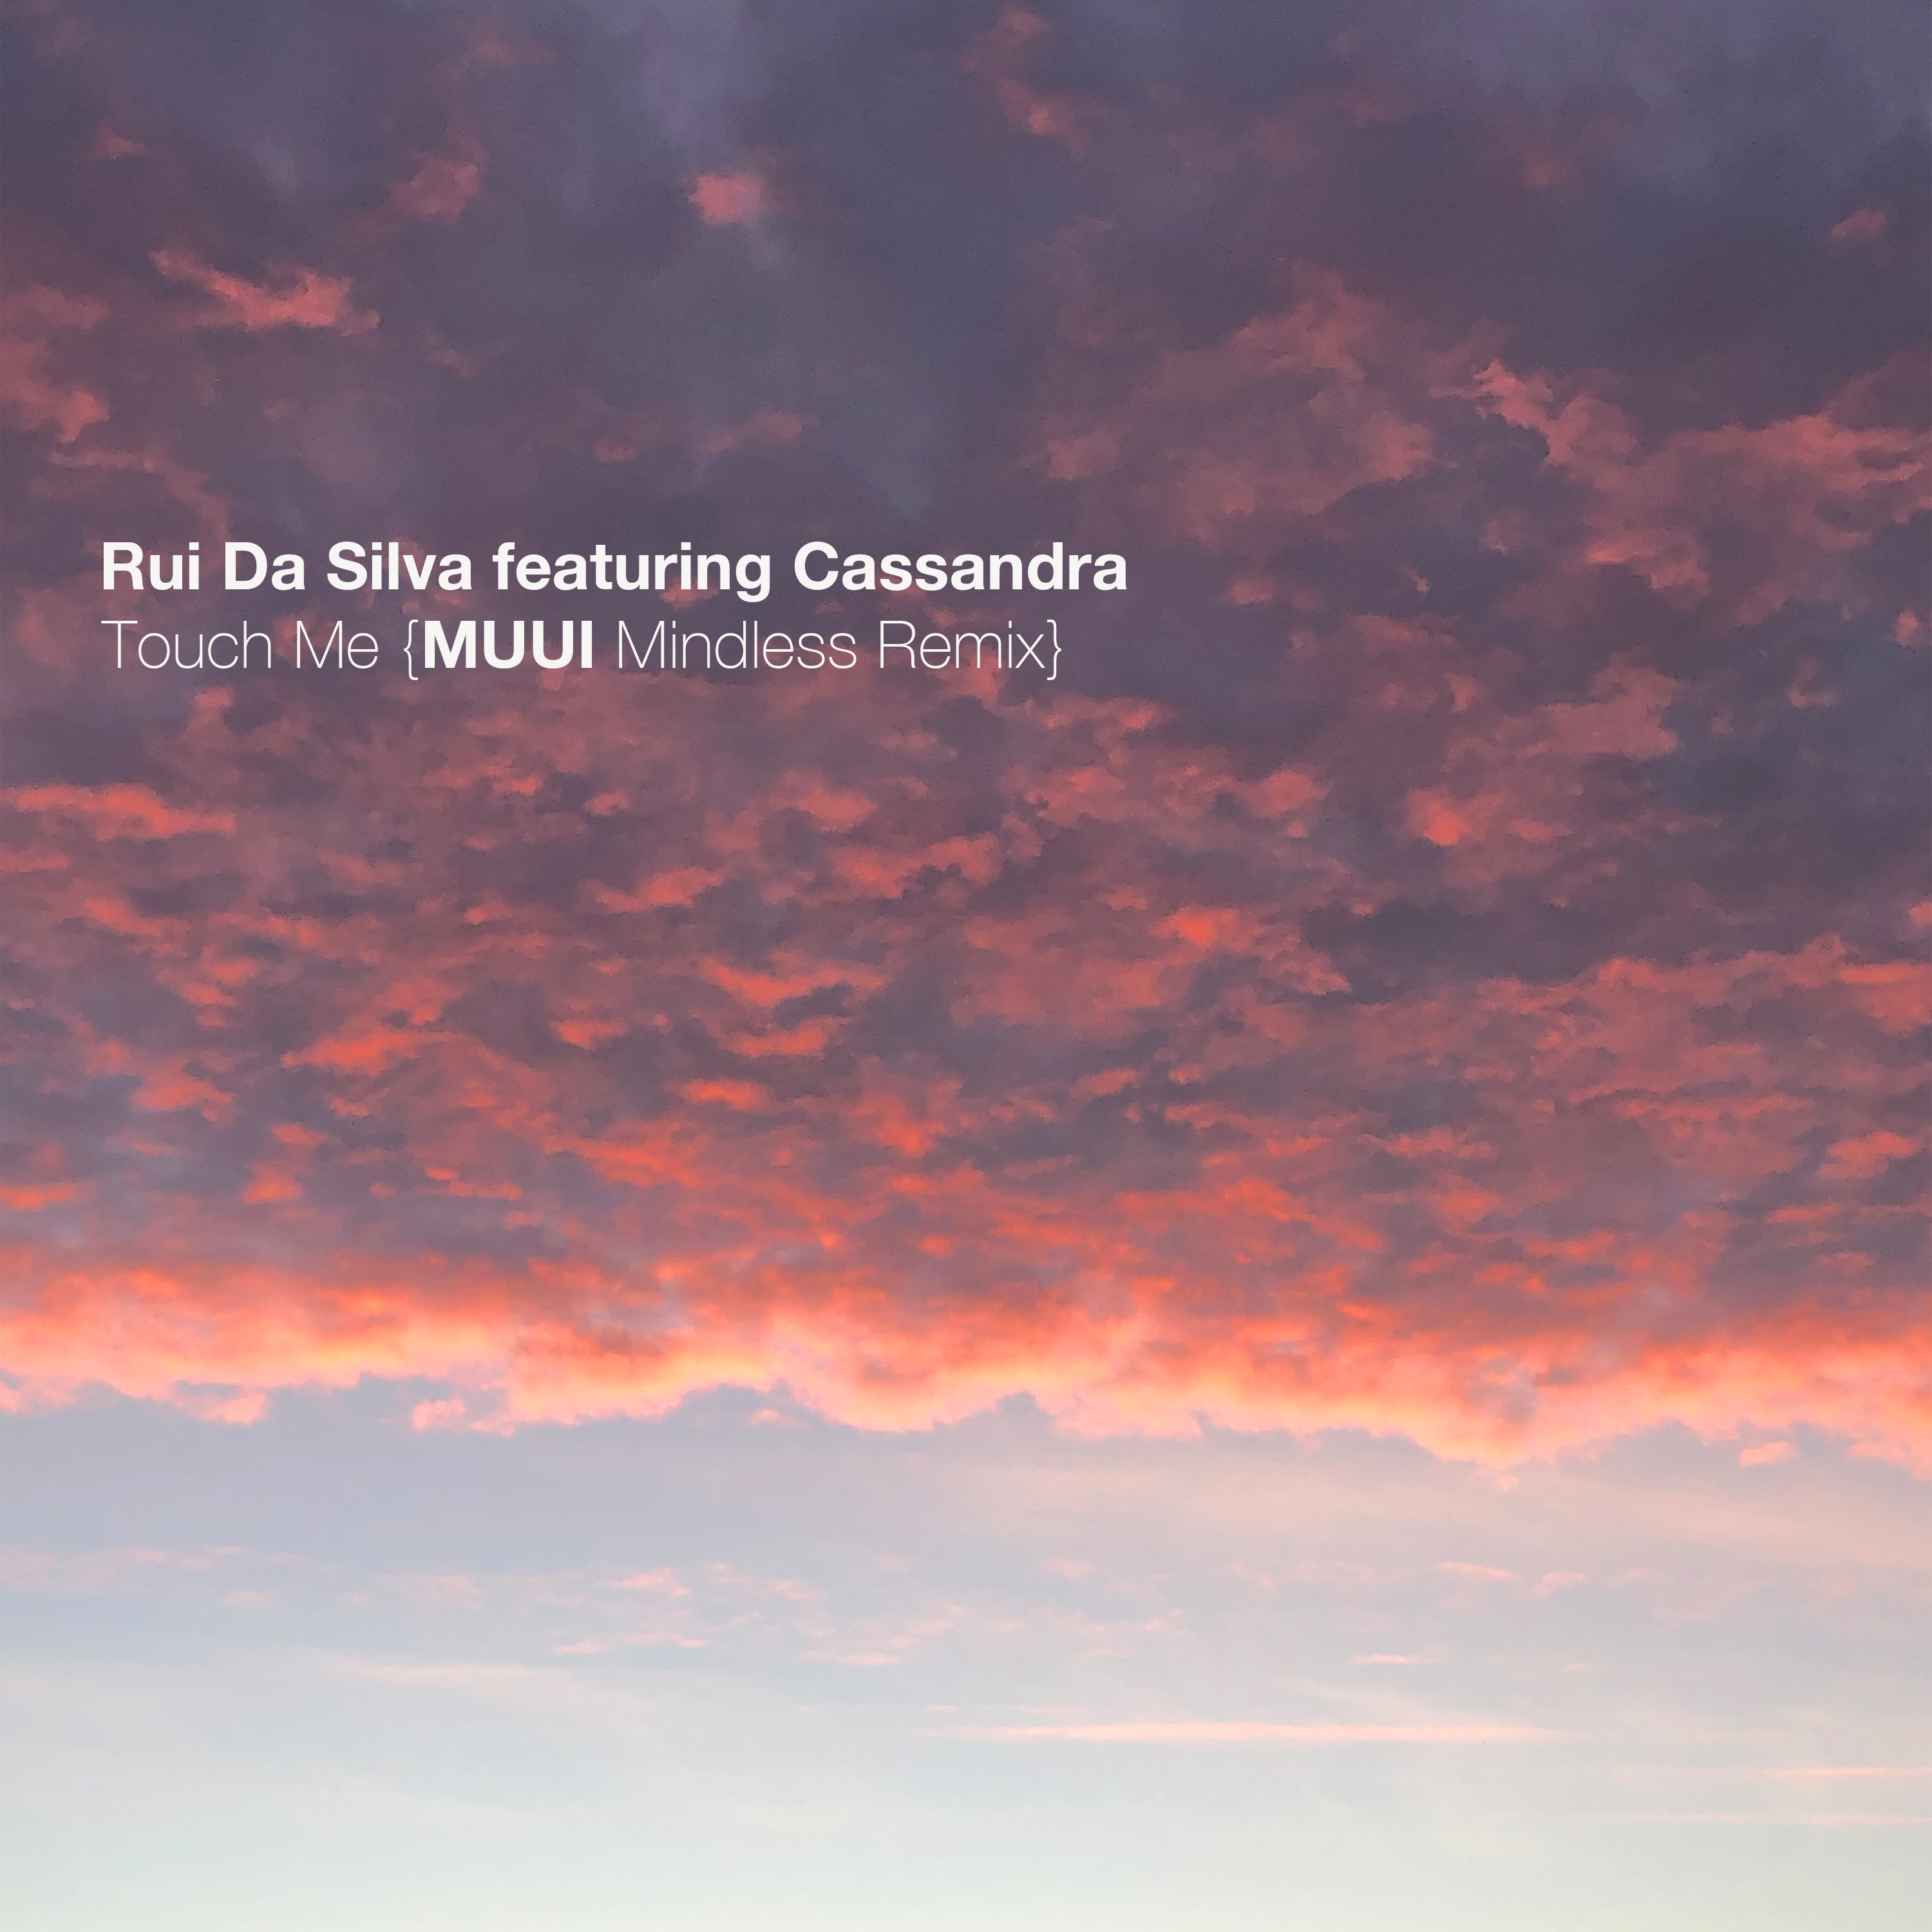 डाउनलोड करा FREE DOWNLOAD: Rui Da Silva feat. Cassandra - Touch Me {MUUI Mindless Remix}